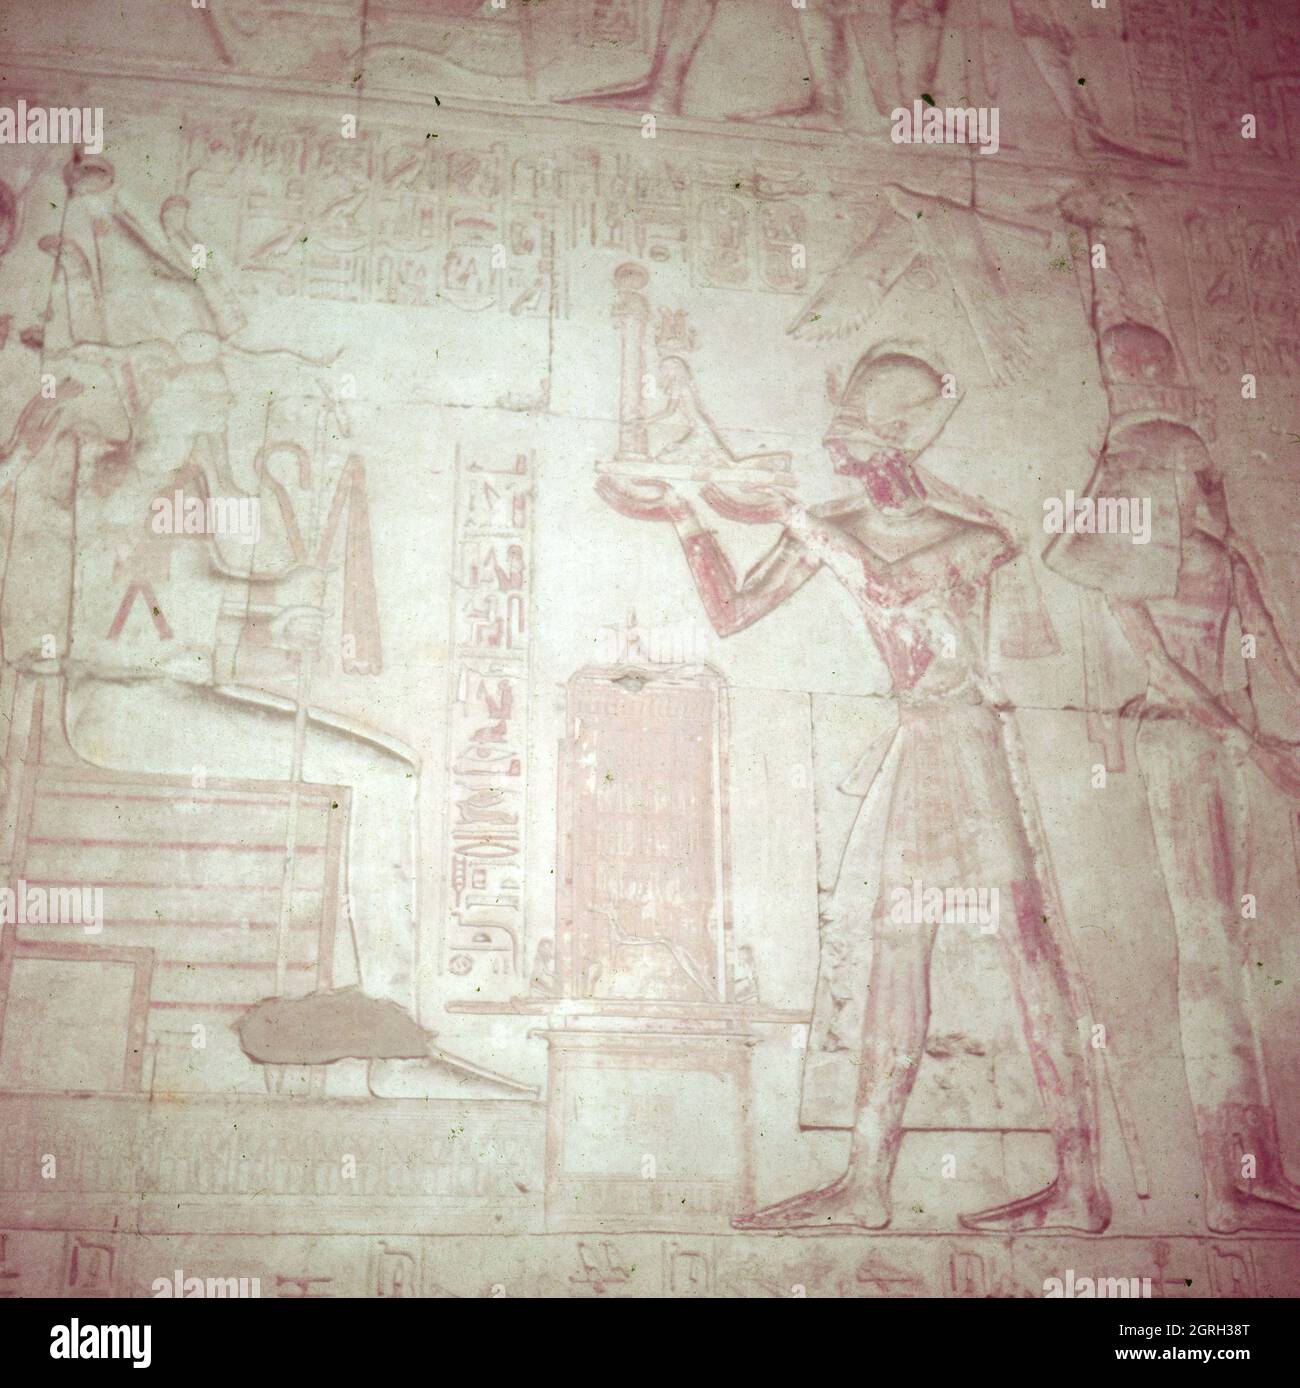 Pharao Sethos opfert dem Gott Osiris auf einem Wandrelief im Totentempel des Pharao Sethos I. in Abydos, Ägypten 1955. Pharaoh Seti making sacrifices to god Osiris on a mural relief at the temple of pharaoh Seti I in Abydos, Egypt 1955. Stock Photo